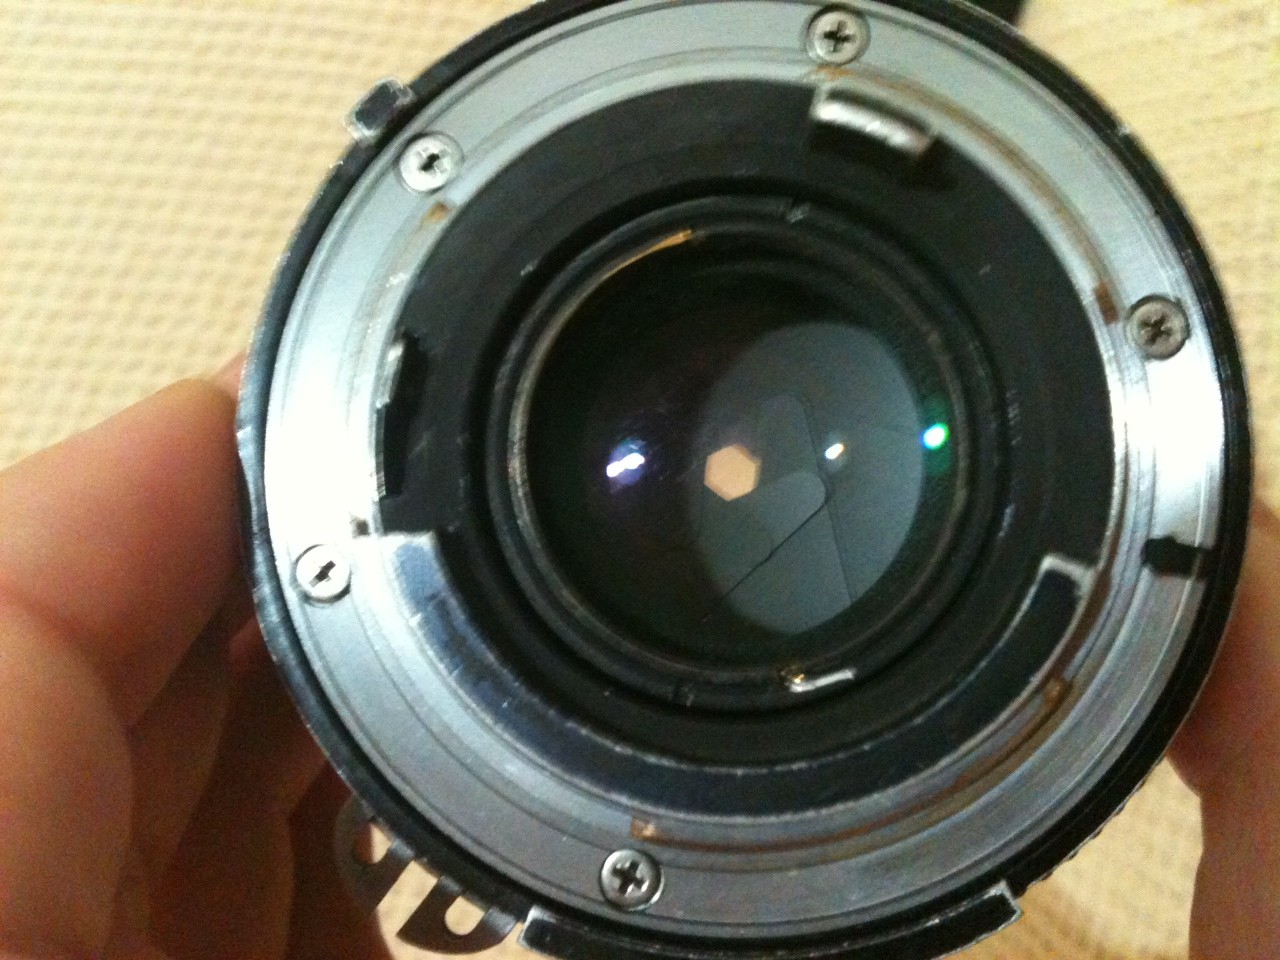  Nikon 50mm 1:2 AI-S Manuel Lens